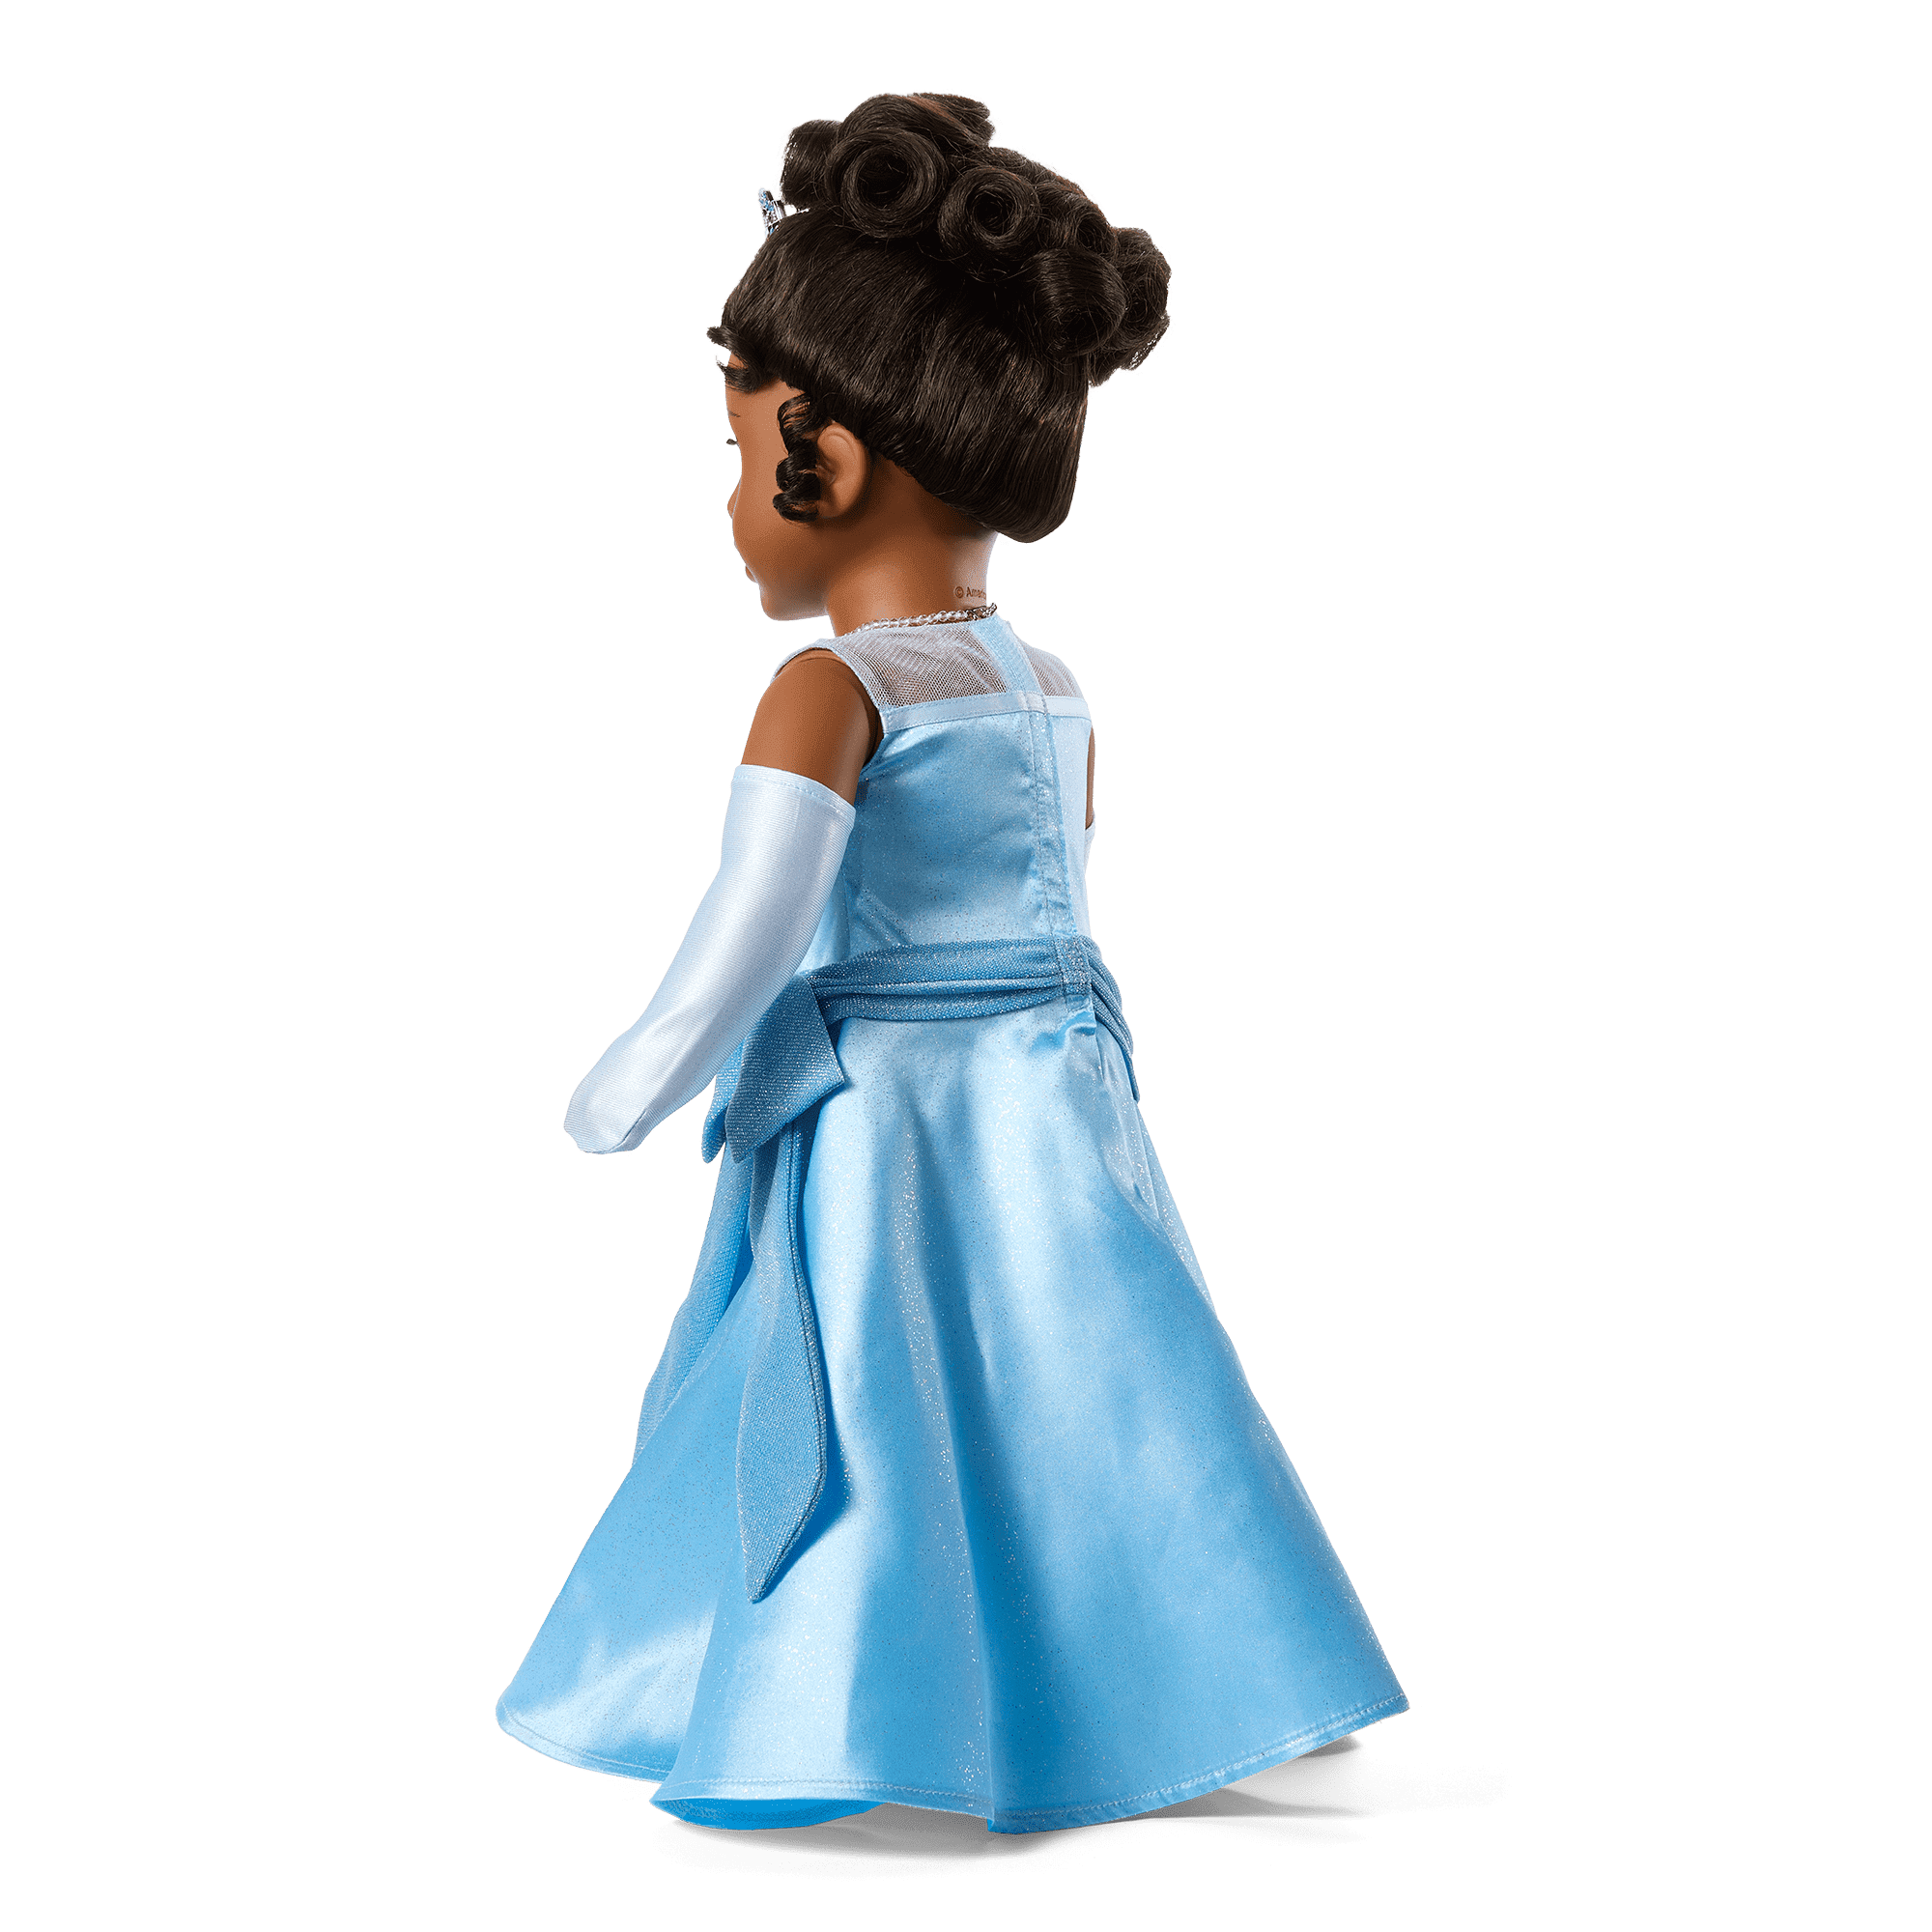 American Girl® Disney Princess Tiana Evening Star Dress & Accessories for 18-inch Dolls